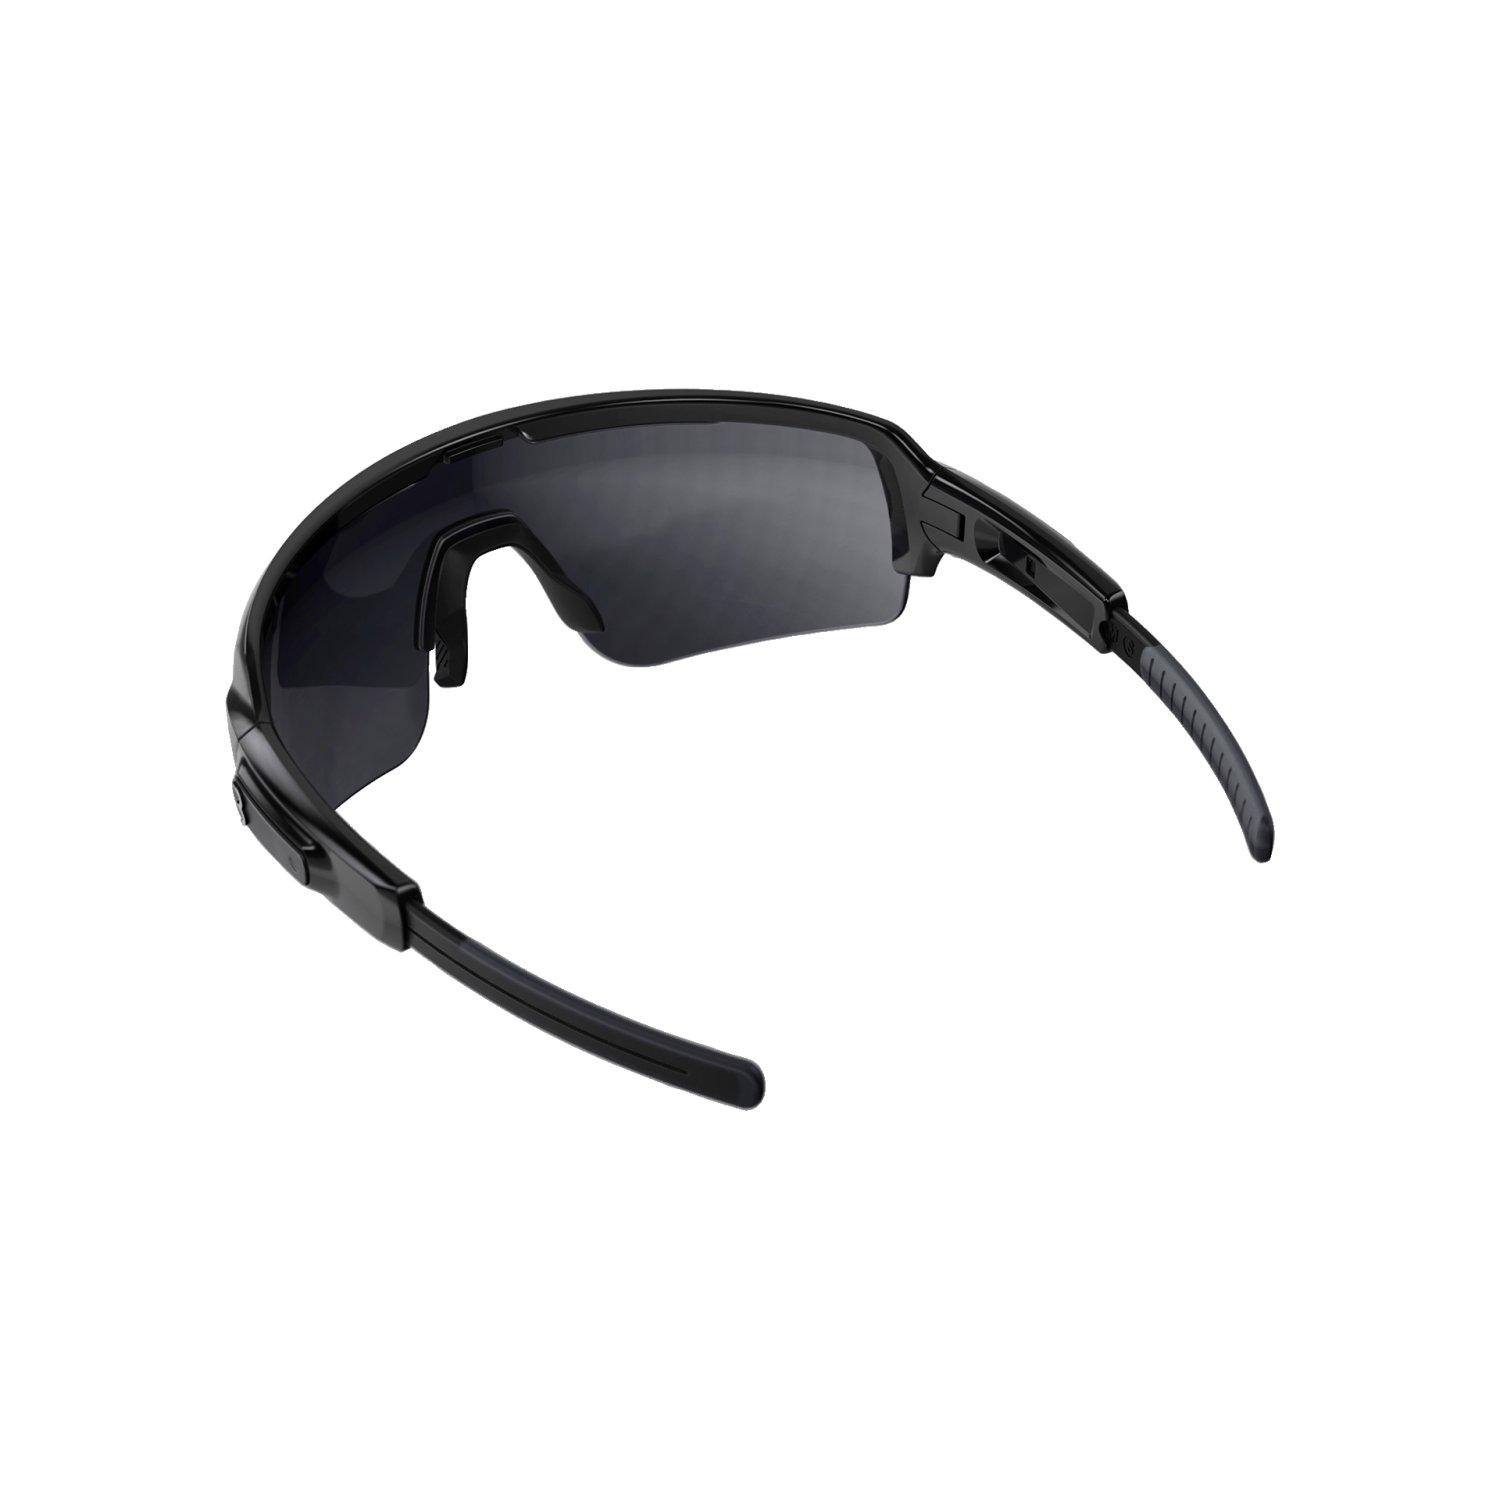 Очки велосипедные BBB 2019 sunglasses Commander PC Smoke MLC silver lens PC clear, glossy black, BSG купить на ЖДБЗ.ру - фотография № 4